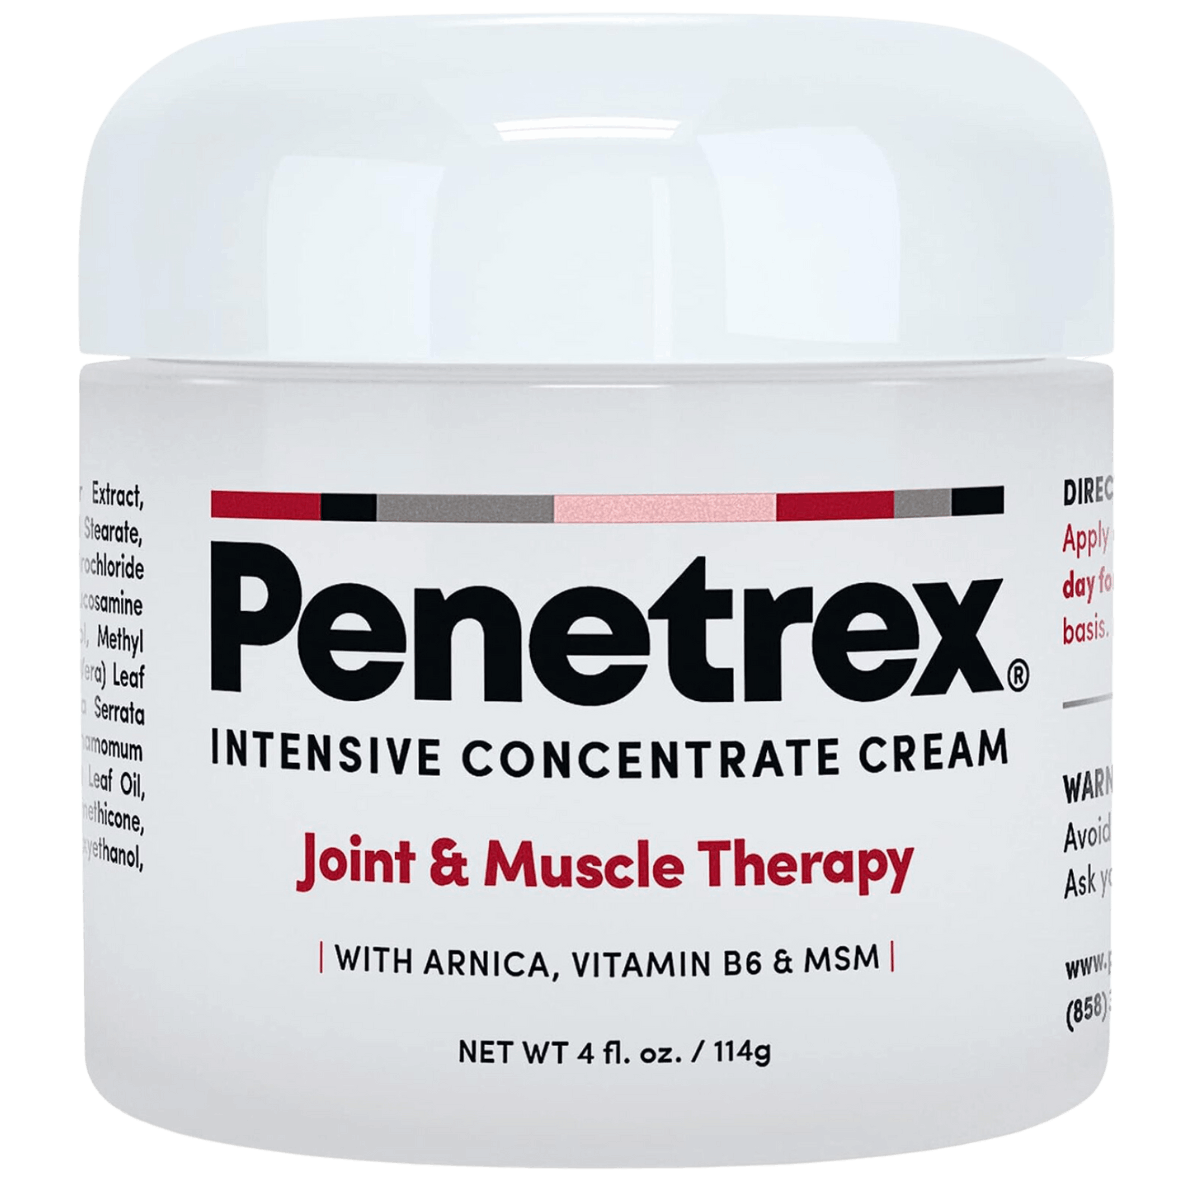 A jar of Penetrex Cream